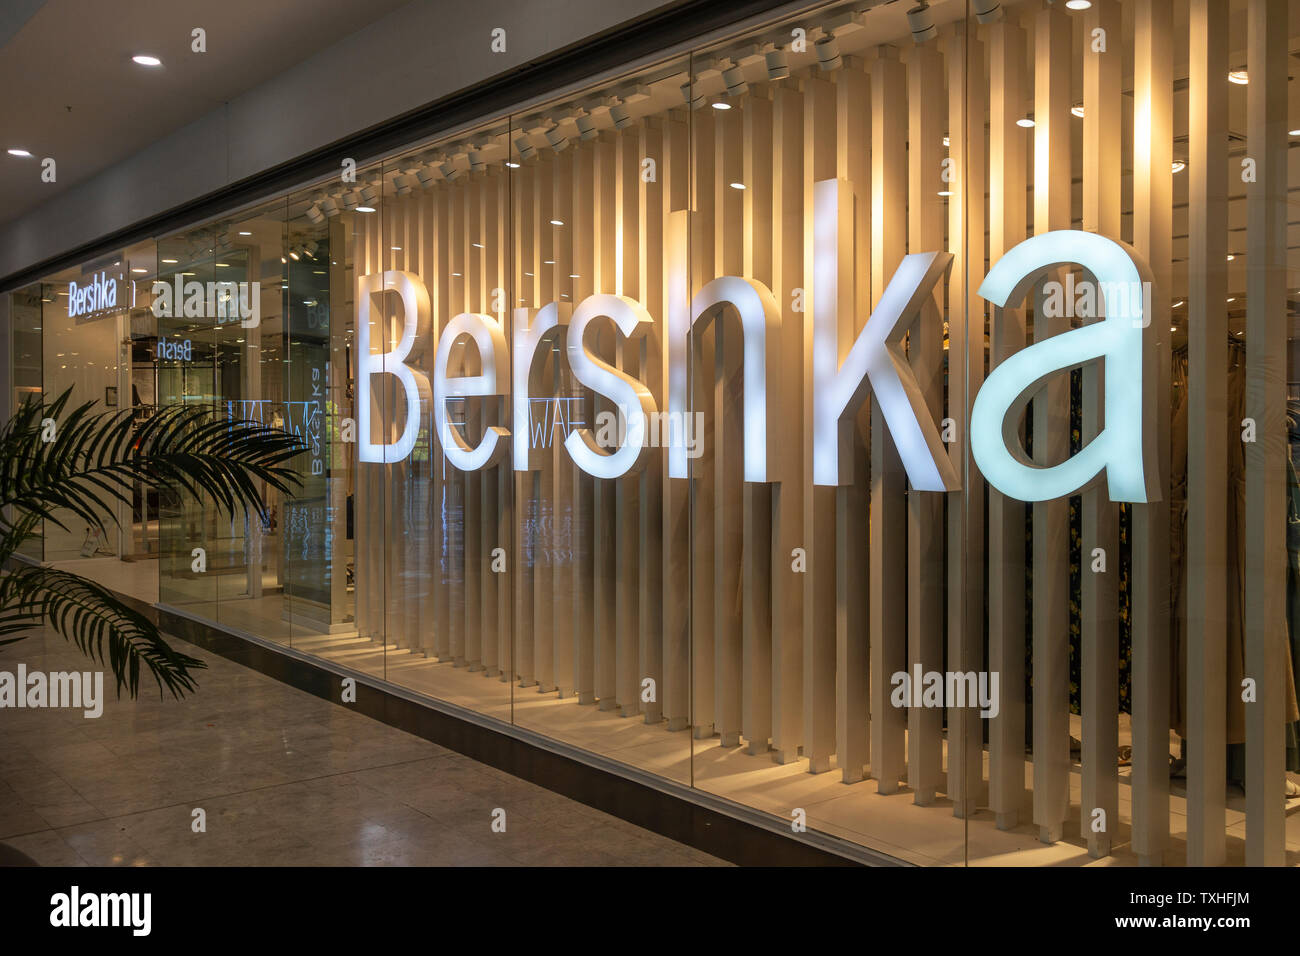 Bershka shopping center -Fotos und -Bildmaterial in hoher Auflösung – Alamy